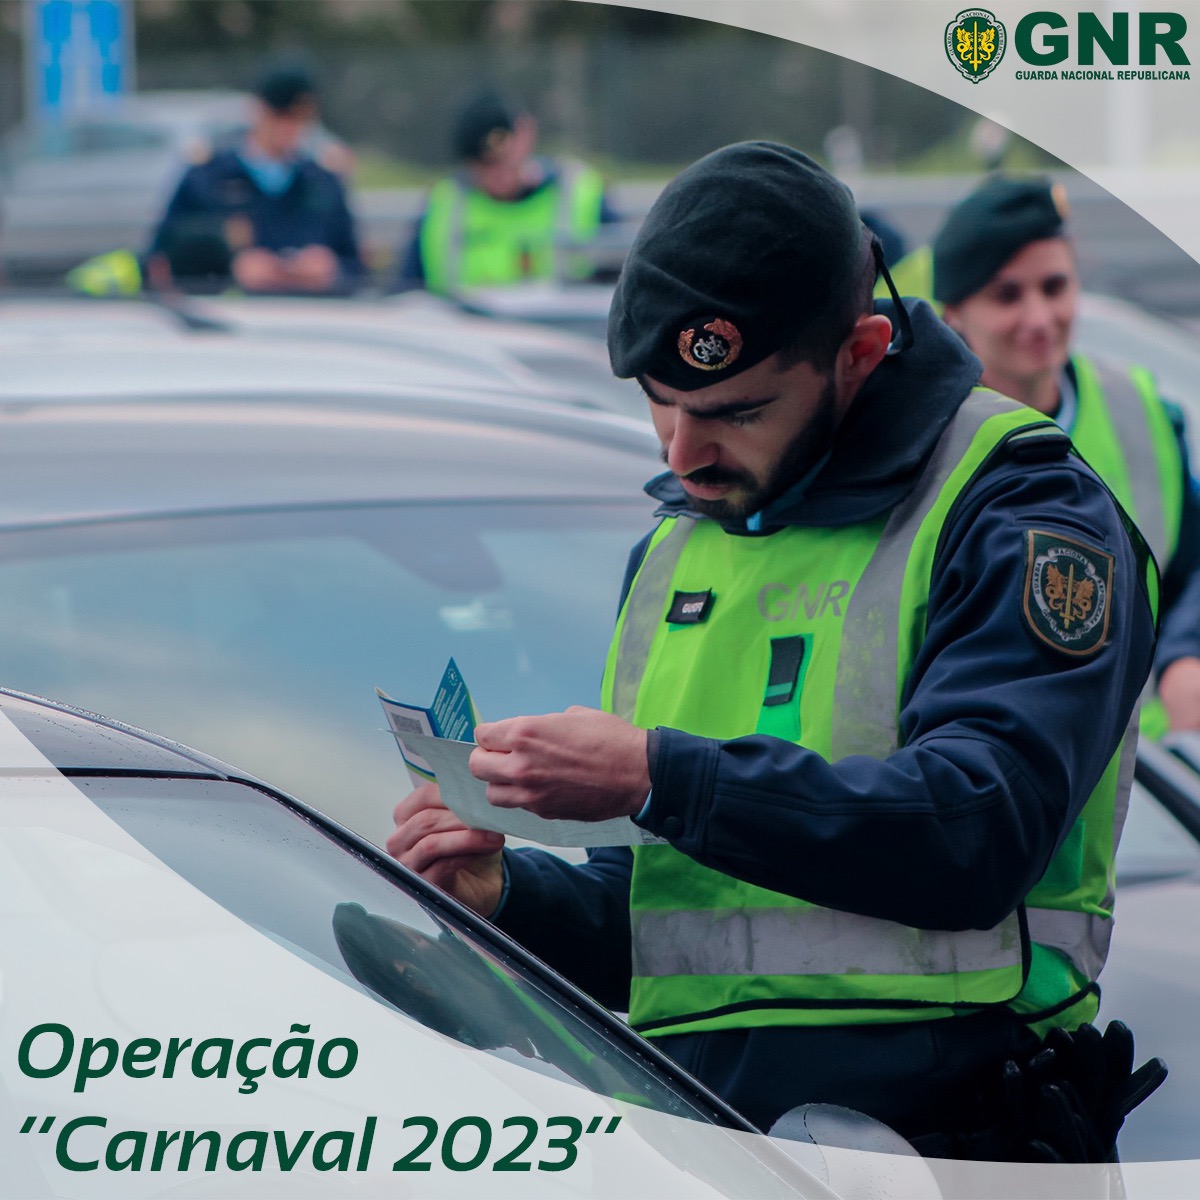 GNR Operacao Carnaval 2023